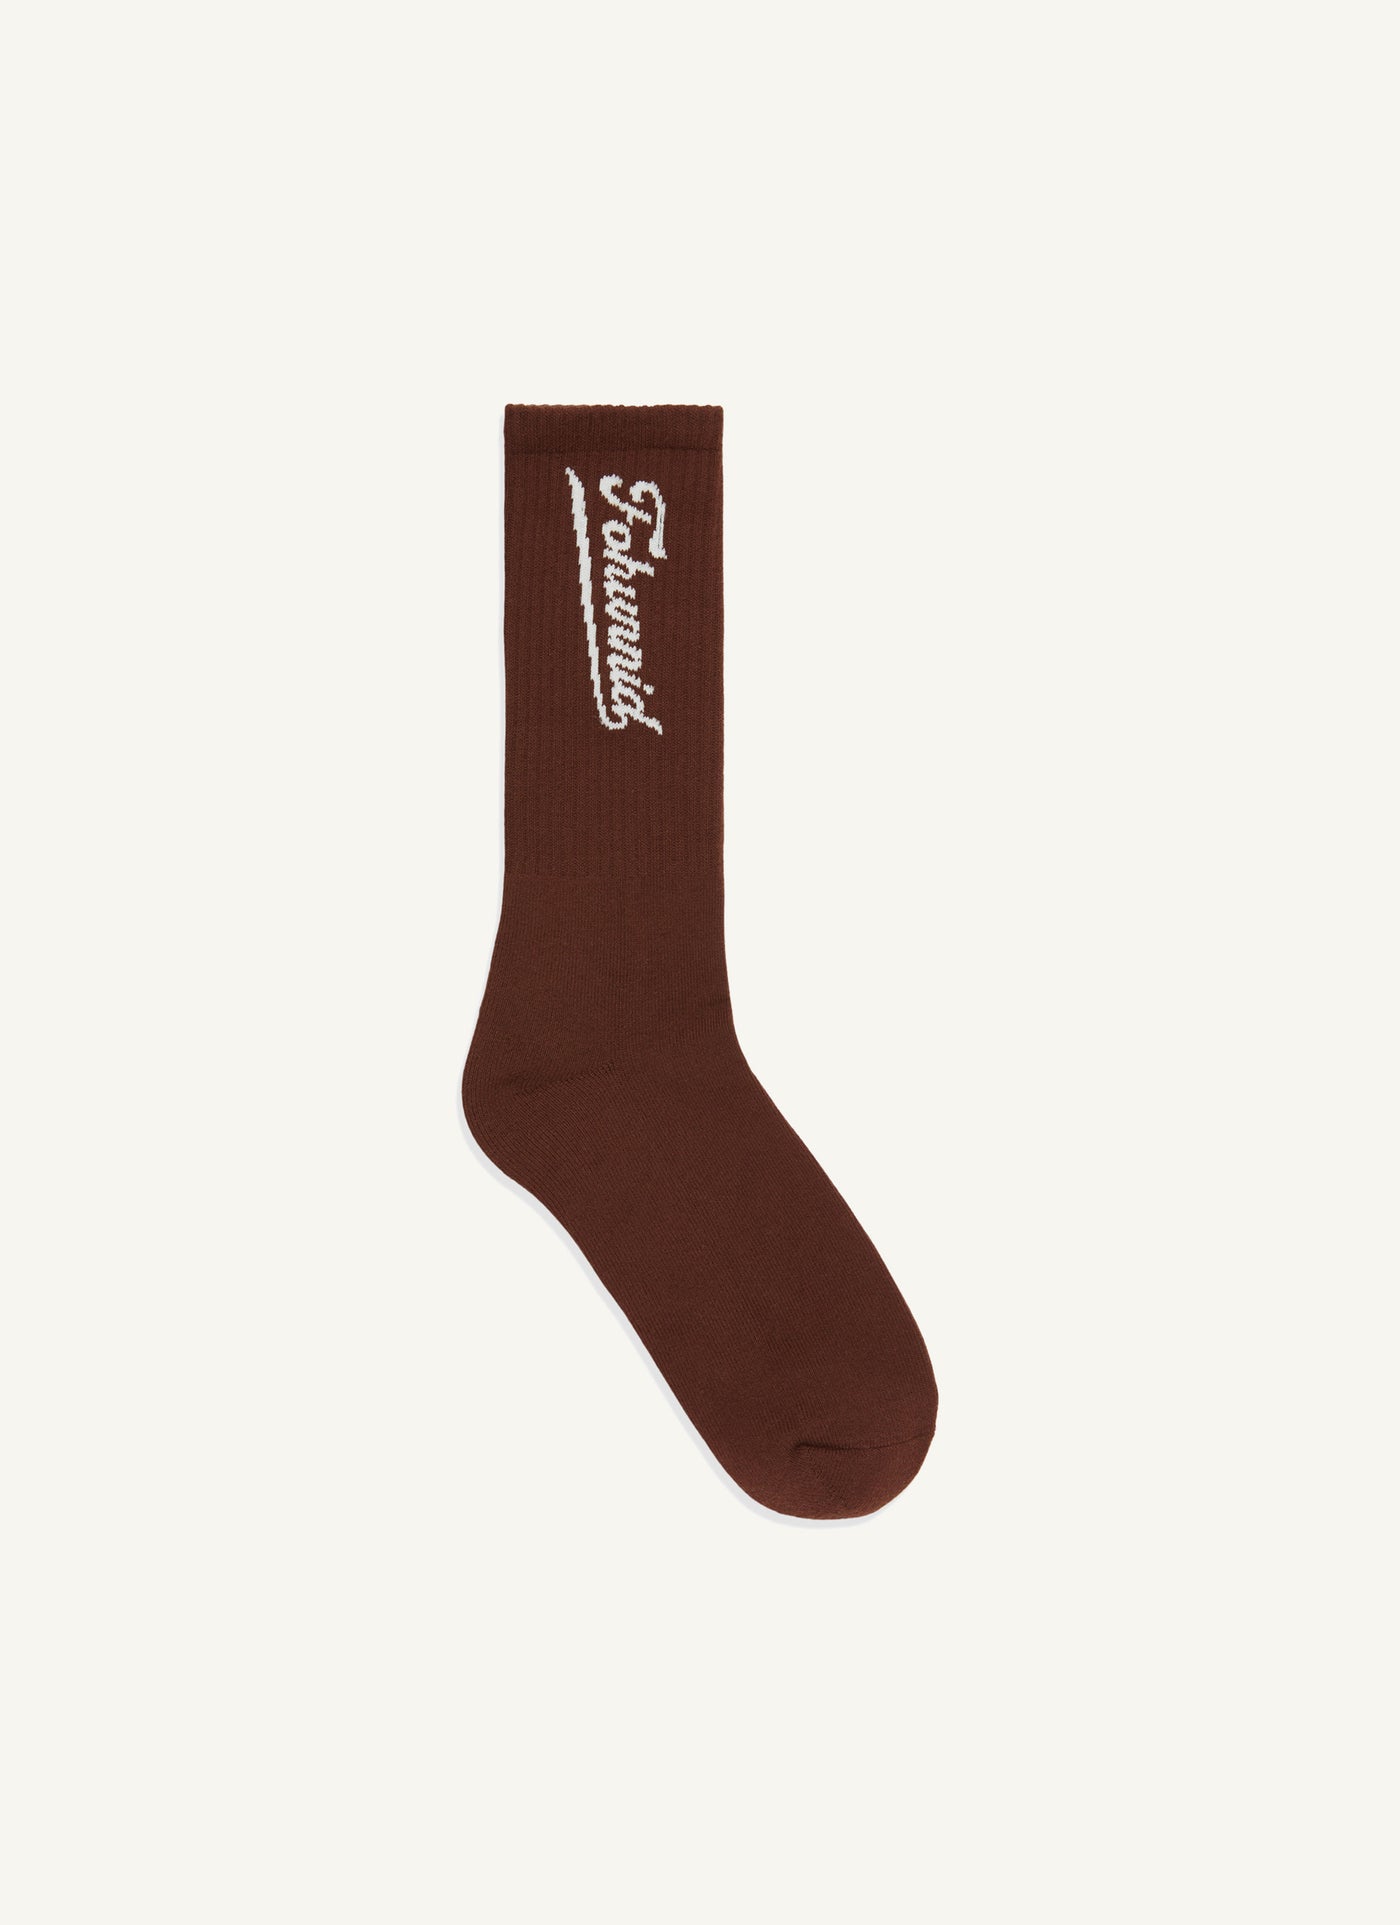 Fohunnid Socks (Brown)